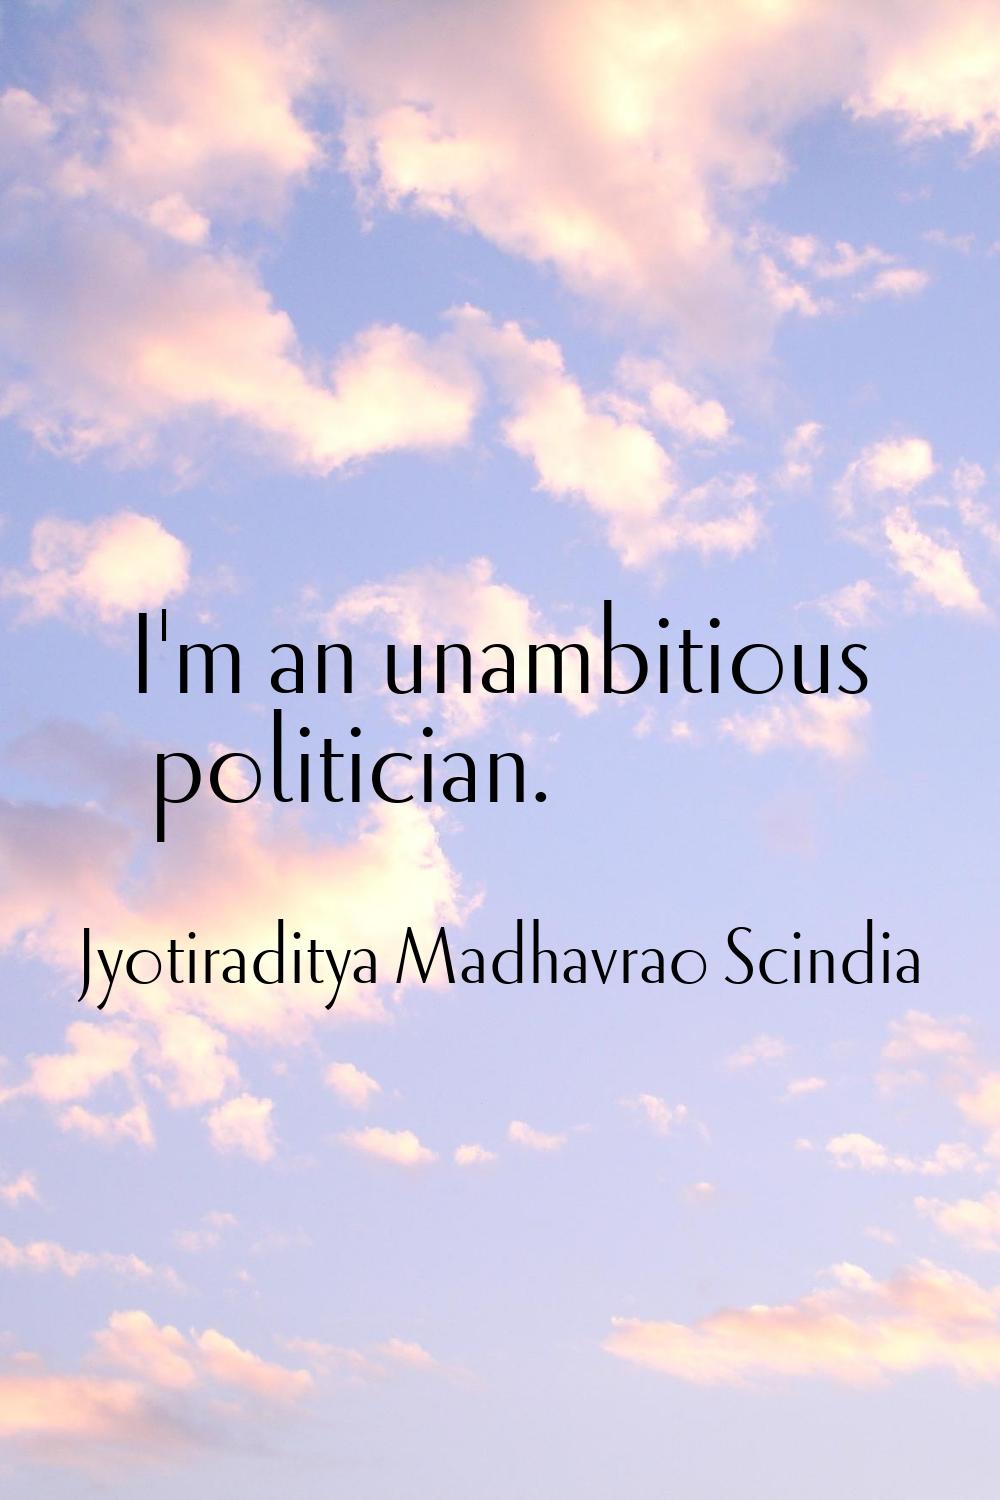 I'm an unambitious politician.